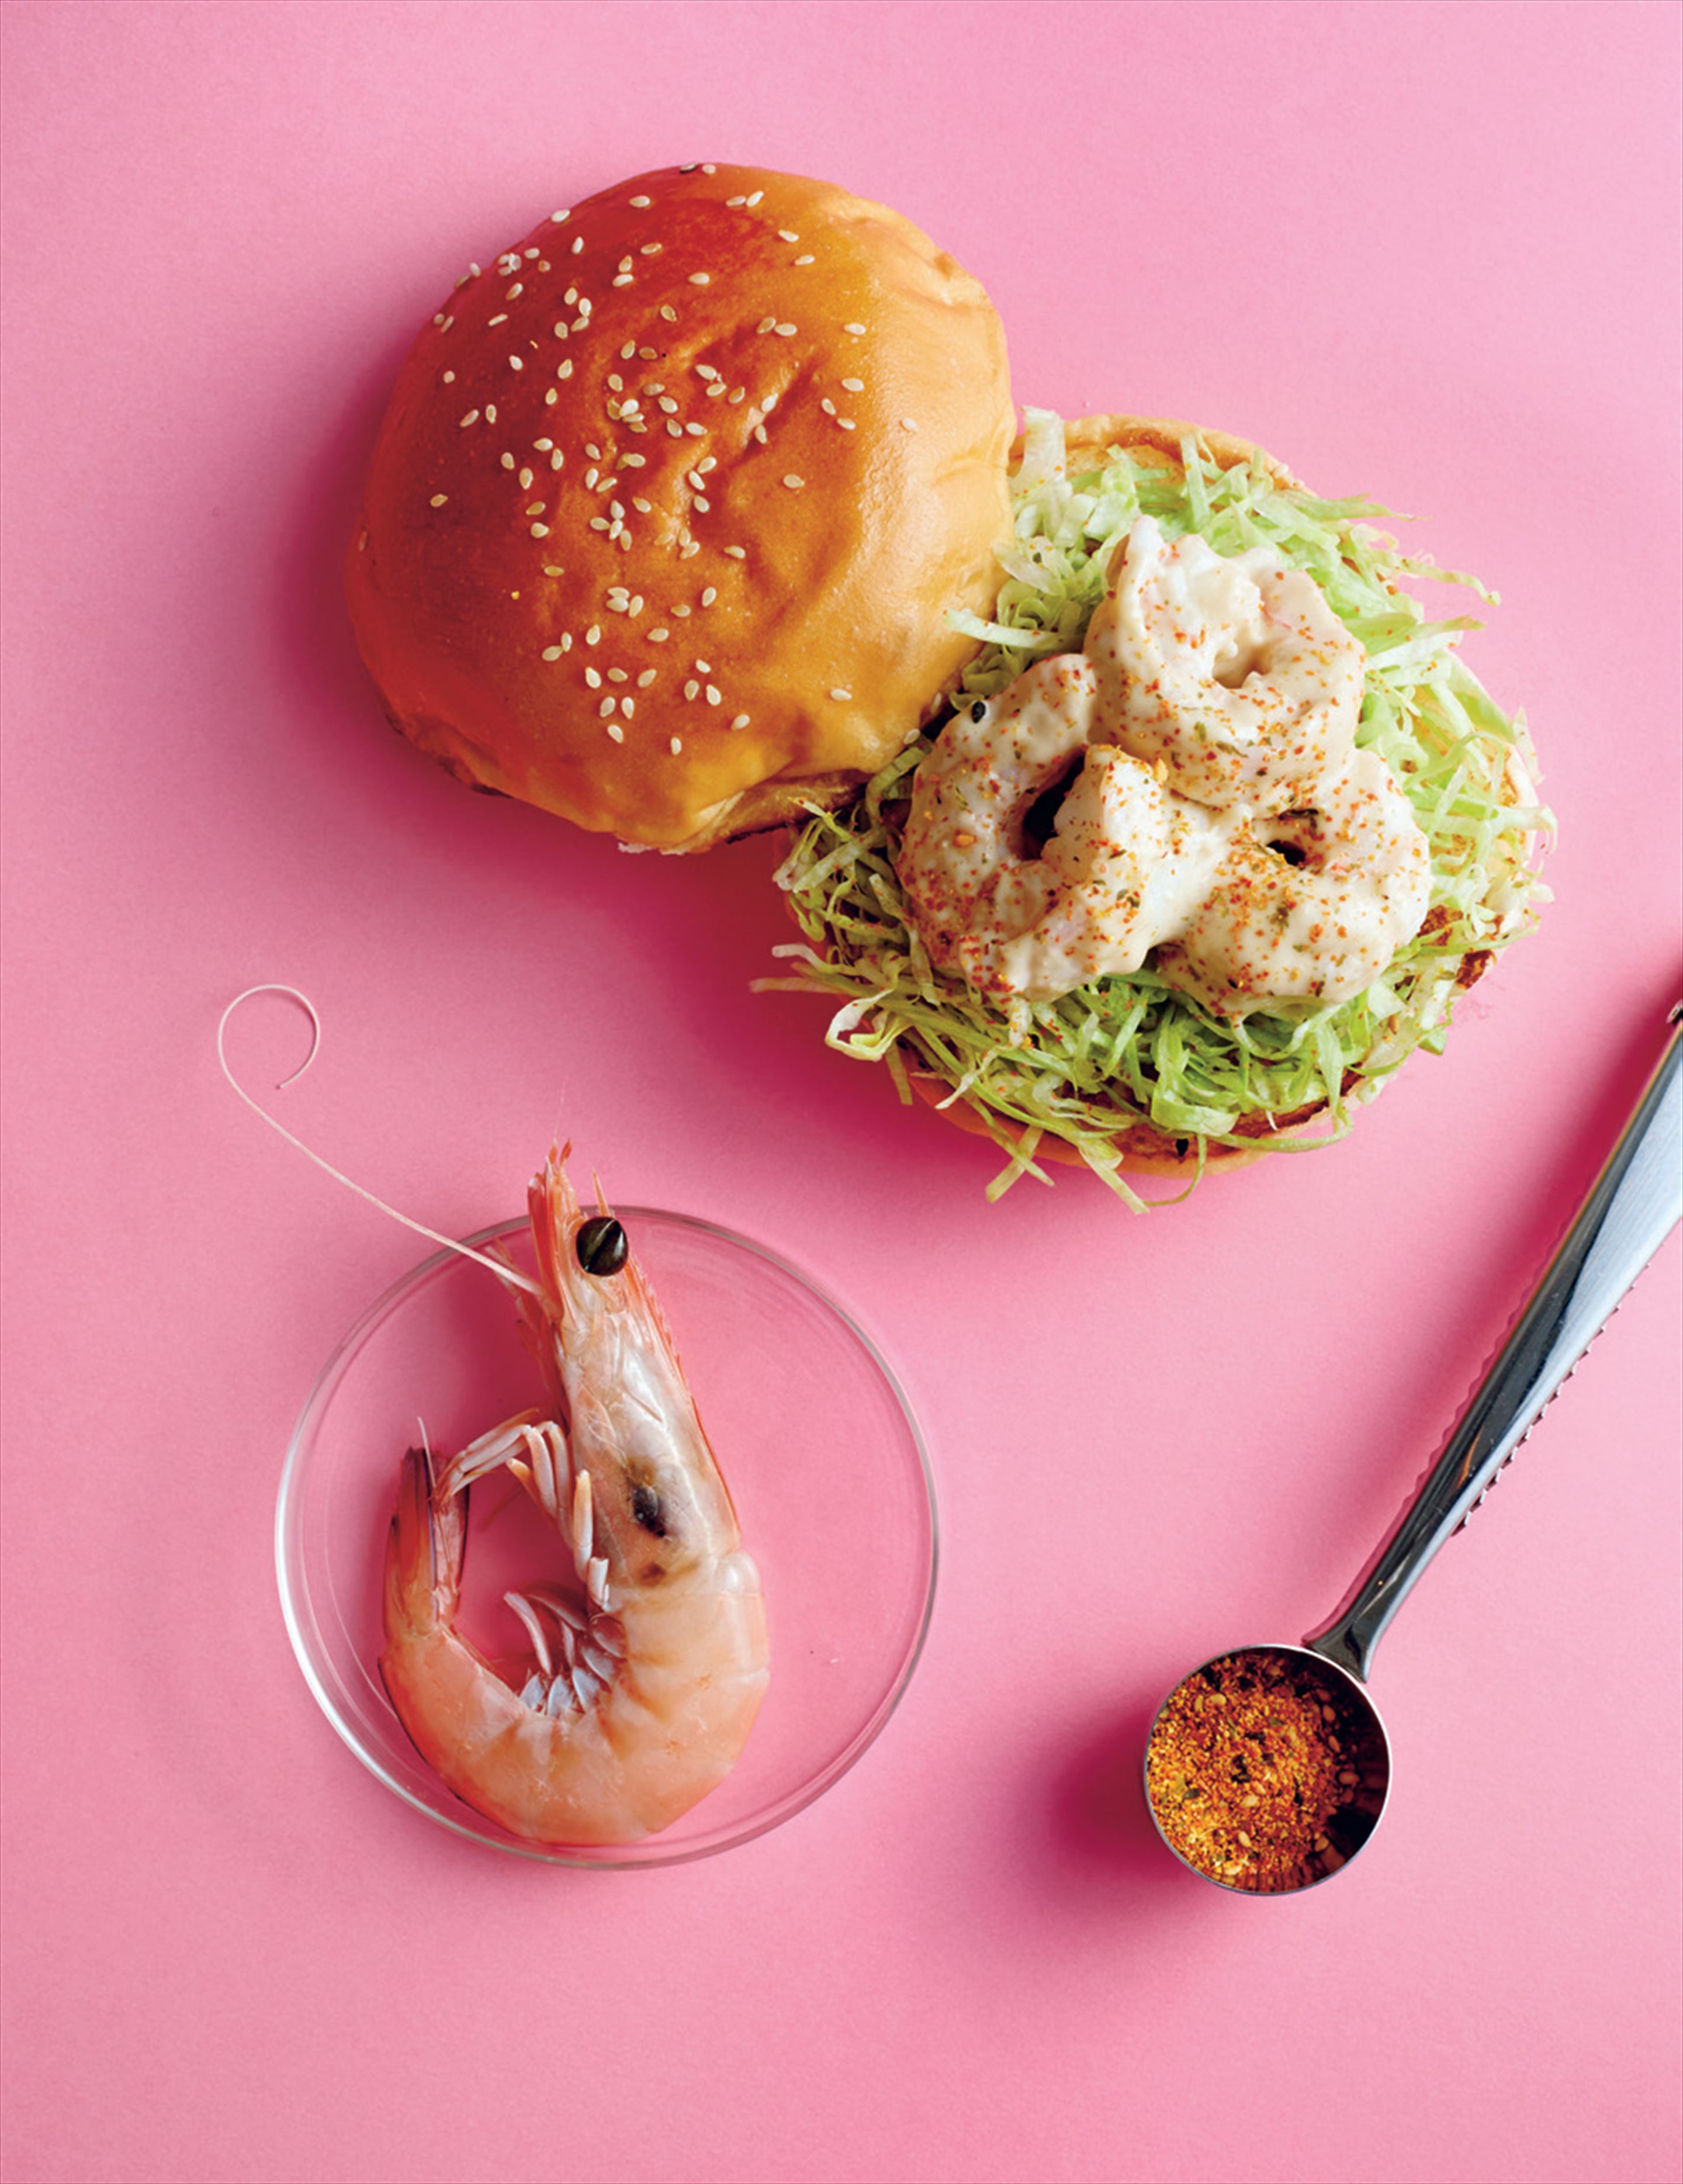 Prawn togarashi burger with yuzu & sesame mayo